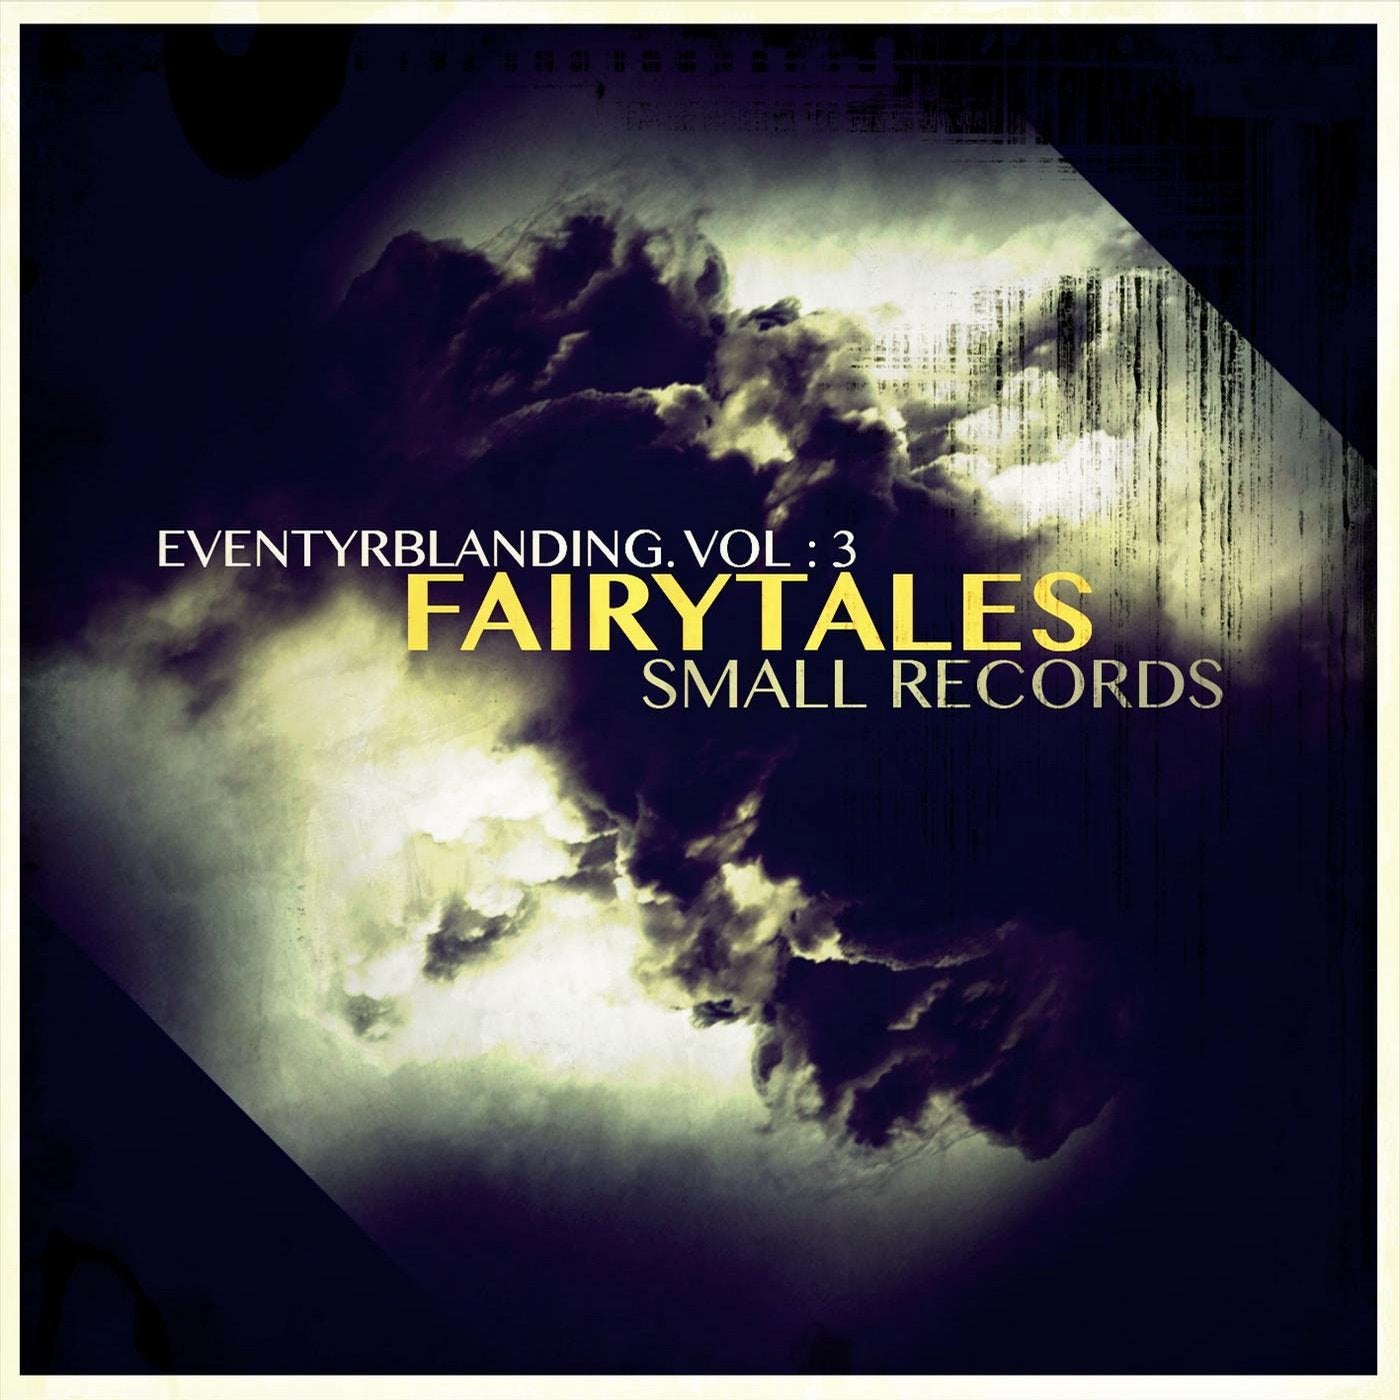 Eventyrblanding (Fairytales) VOL 3 - Compilation